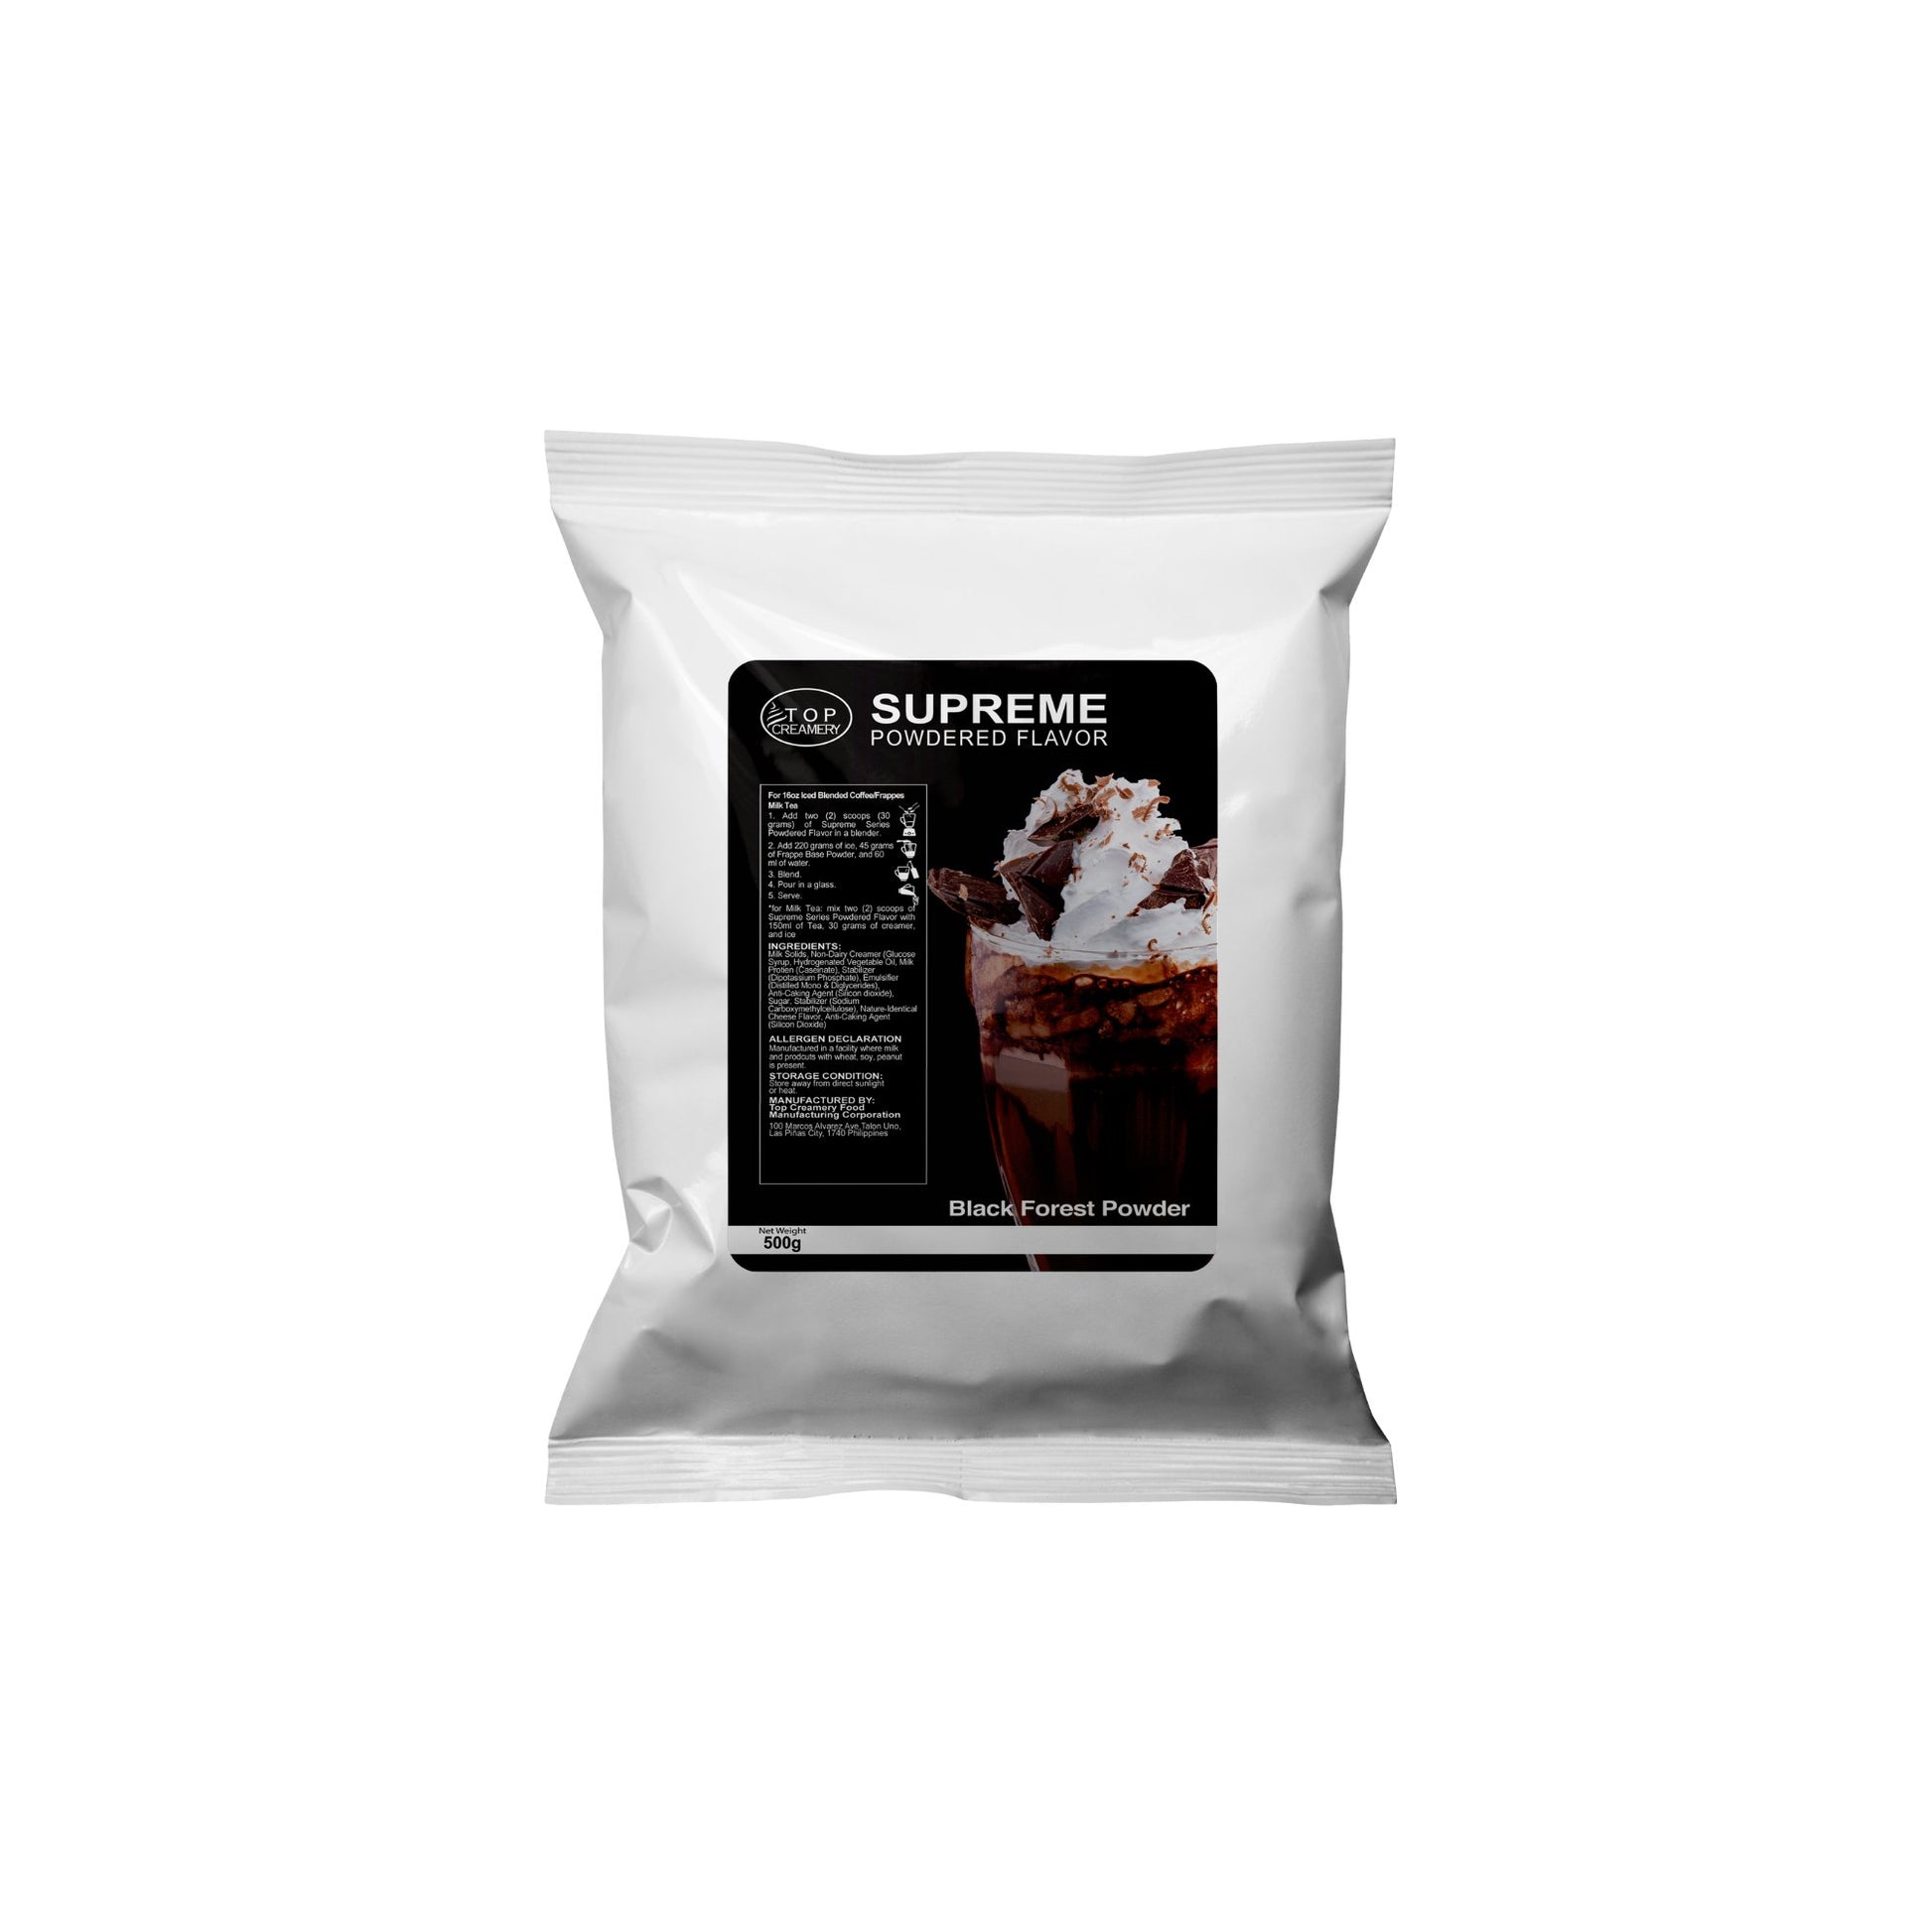 TOP Creamery Supreme Series Black Forest Powdered Flavor 500g - Kreme City Supplies